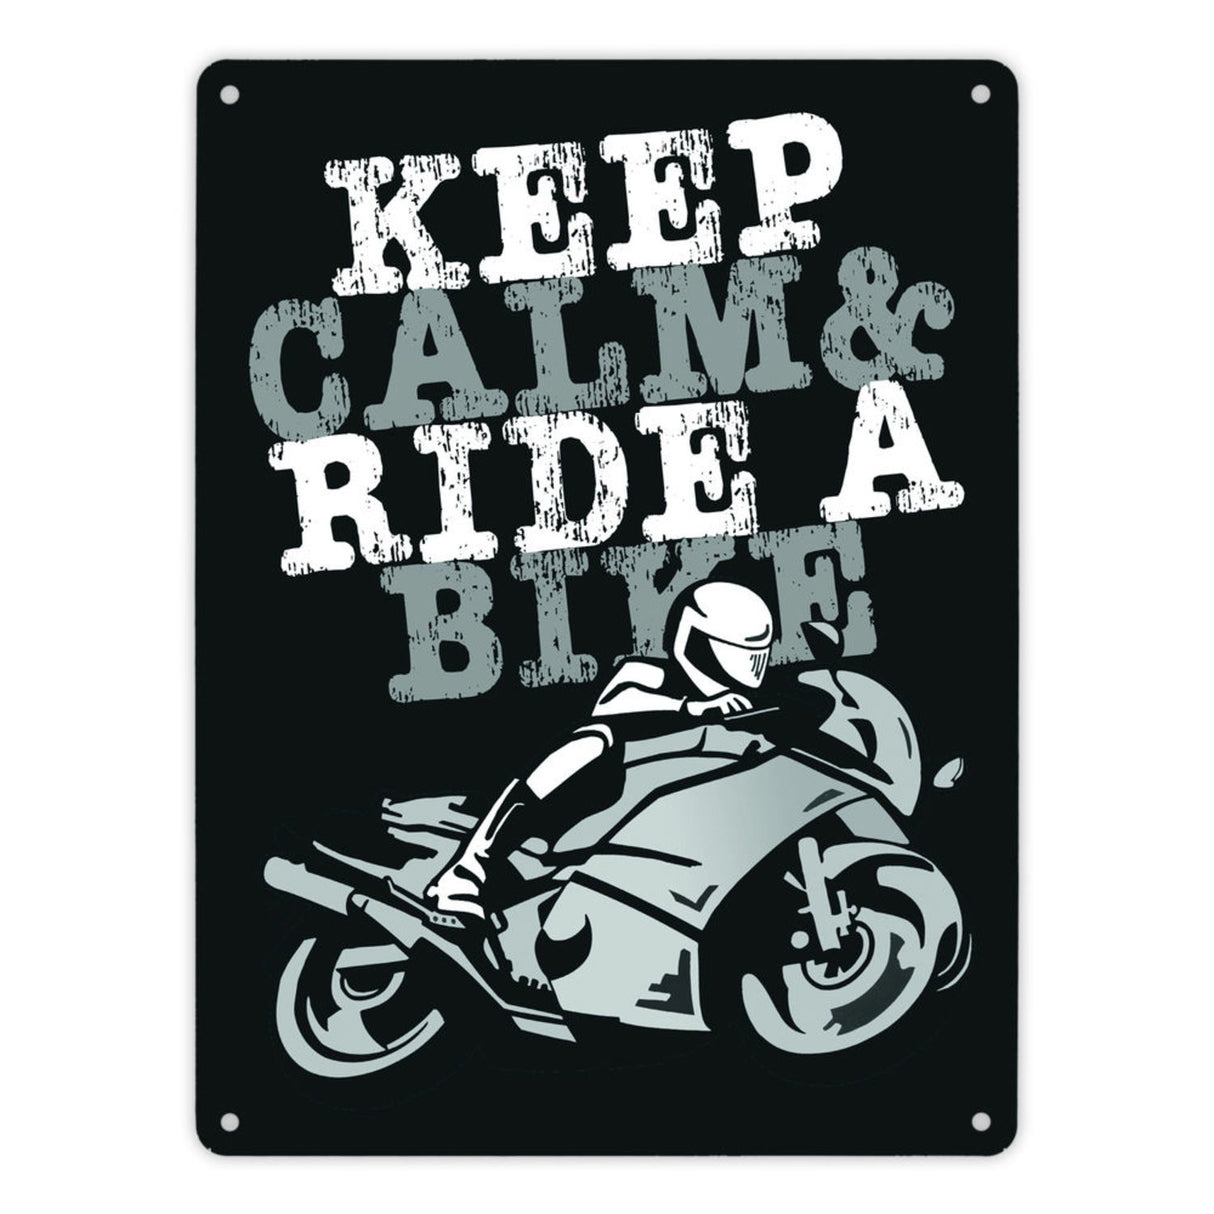 Keep calm & ride a bike Metallschild zum Thema Motorrad fahren